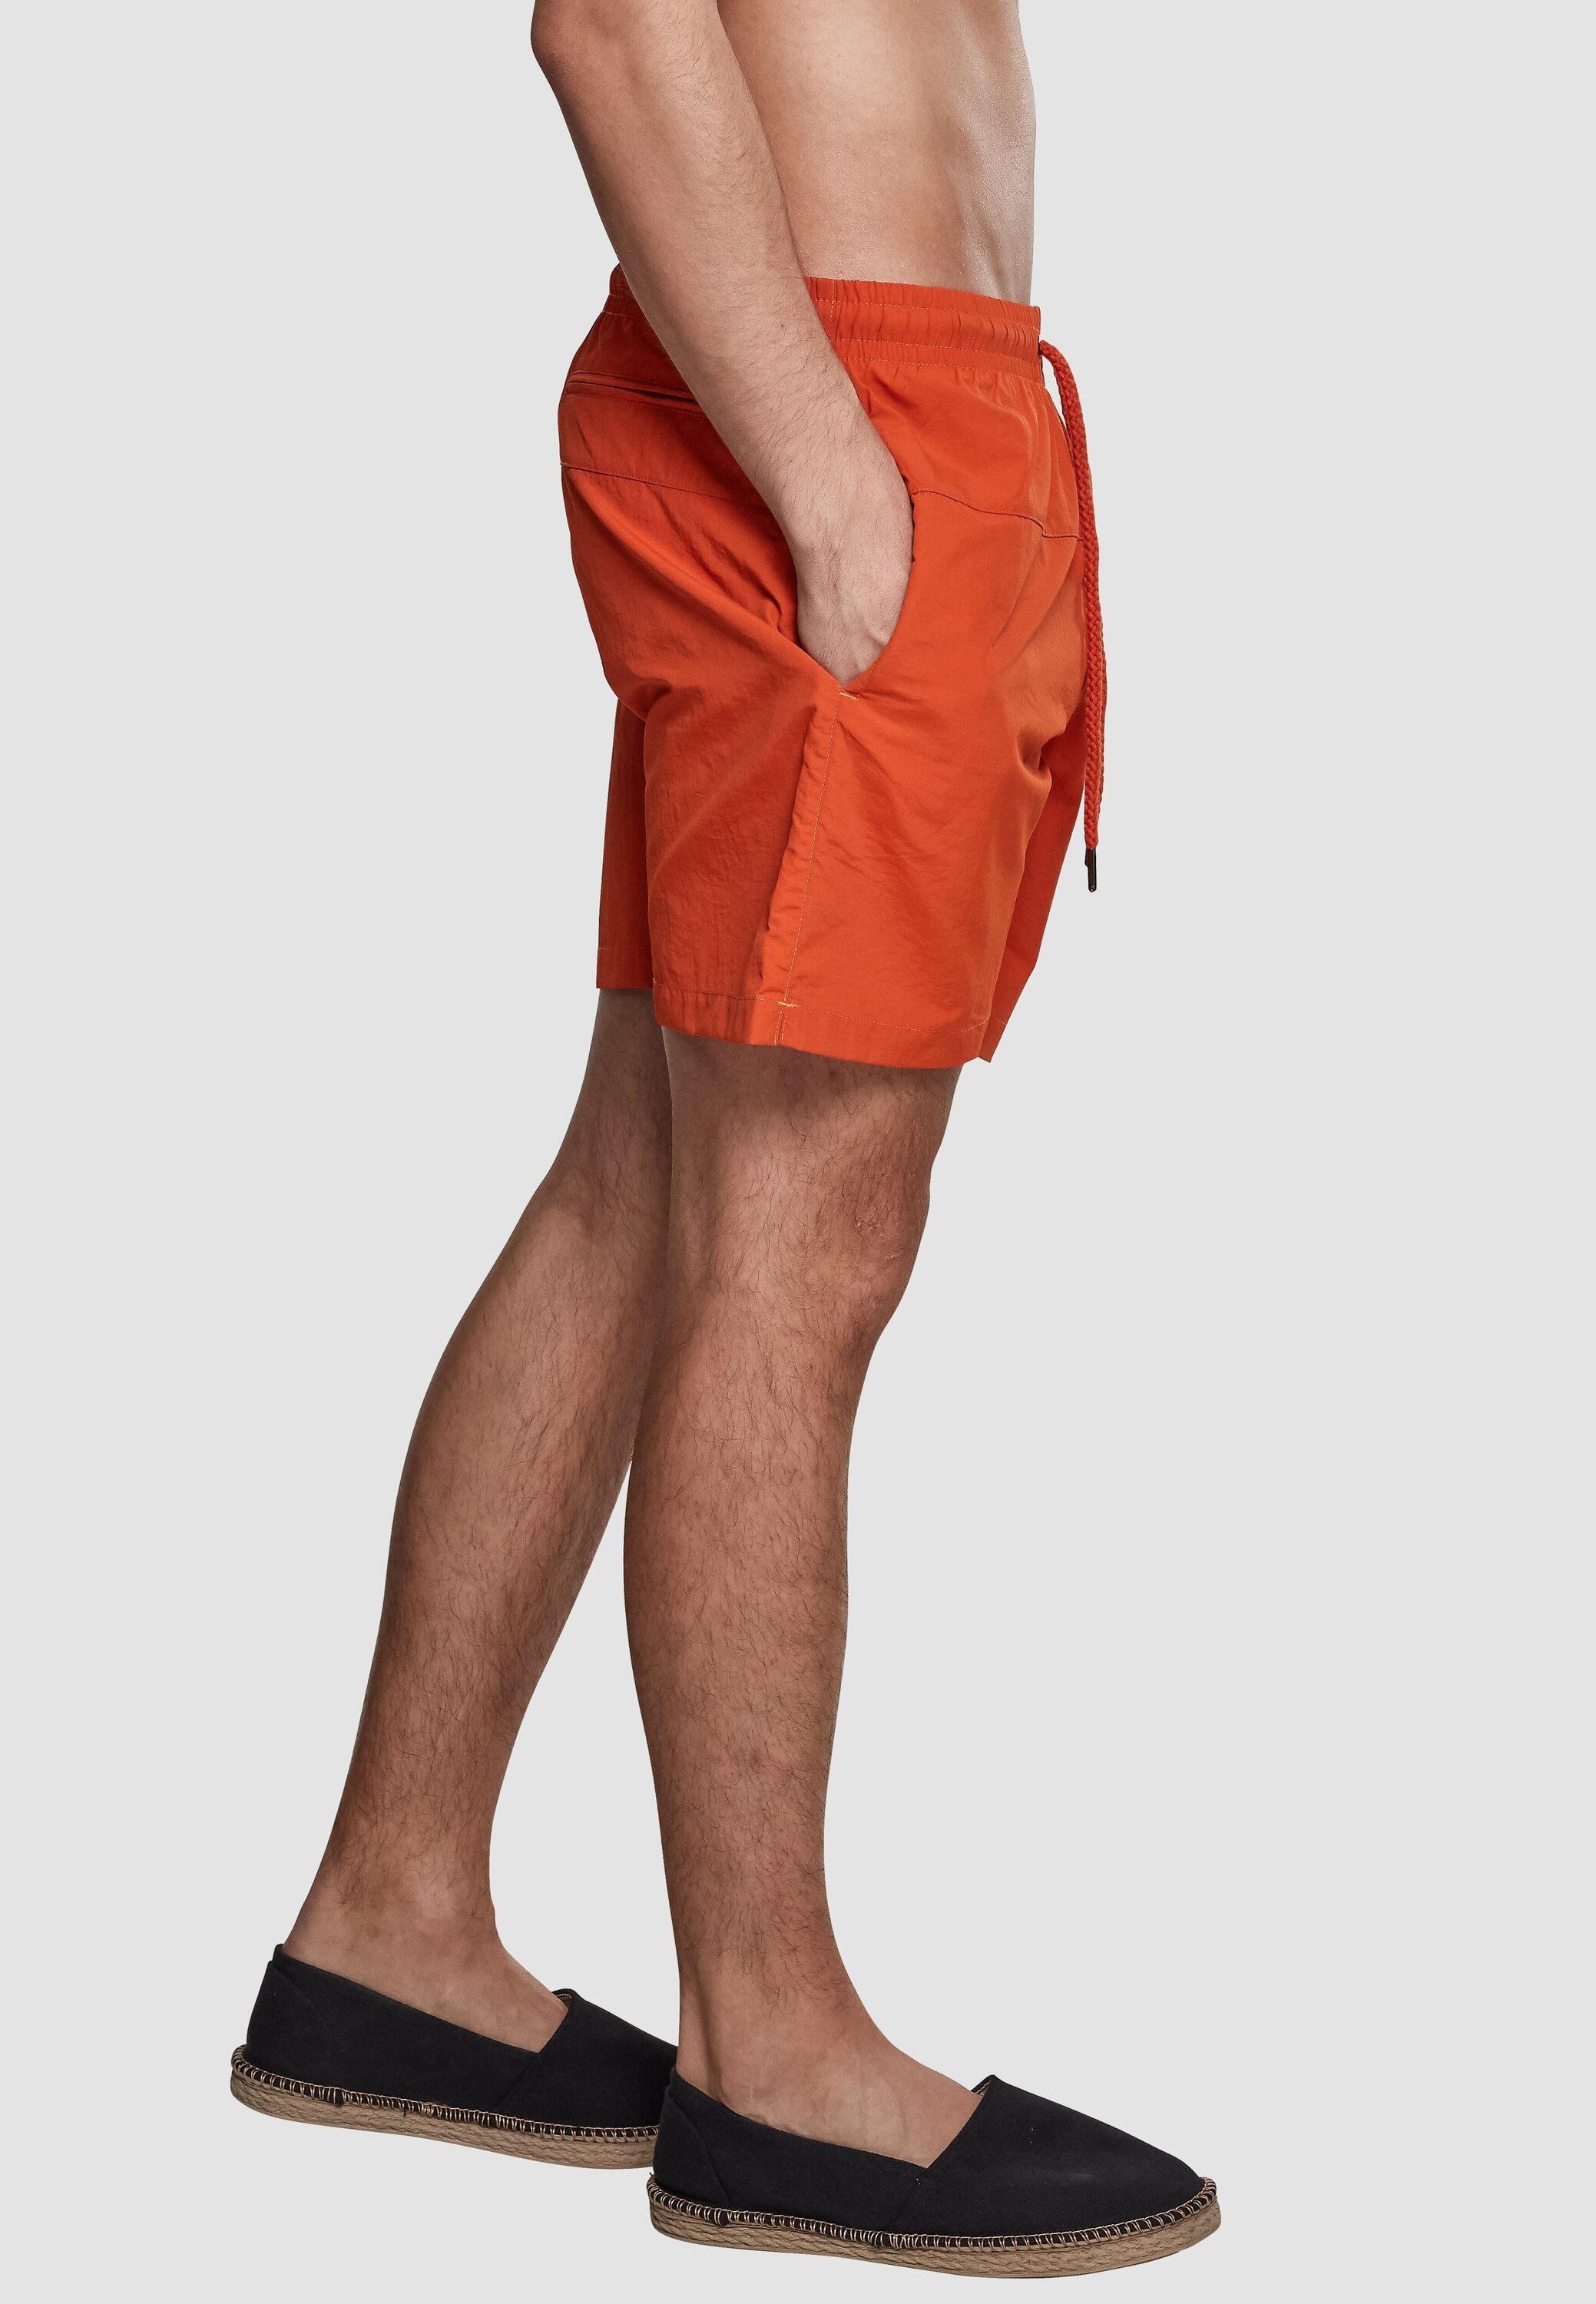 rust CLASSICS Shorts Herren URBAN Swim orange Badeshorts